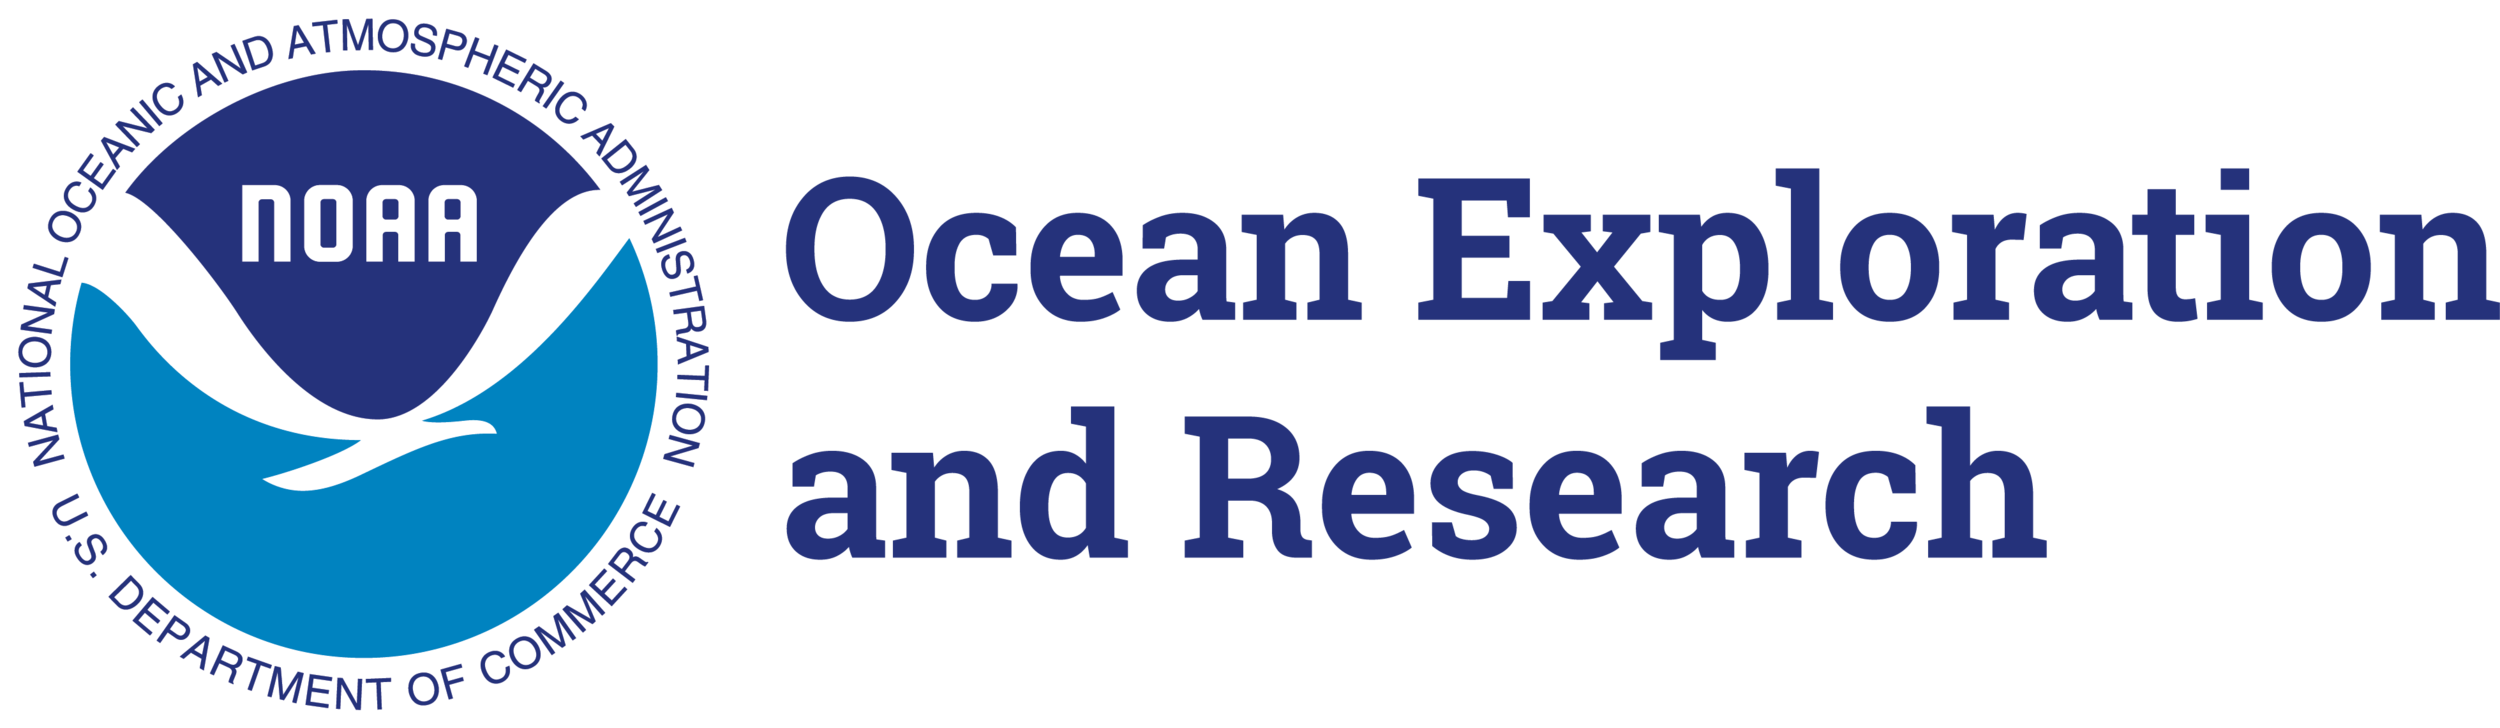 NOAA Office of Ocean Exploration & Research